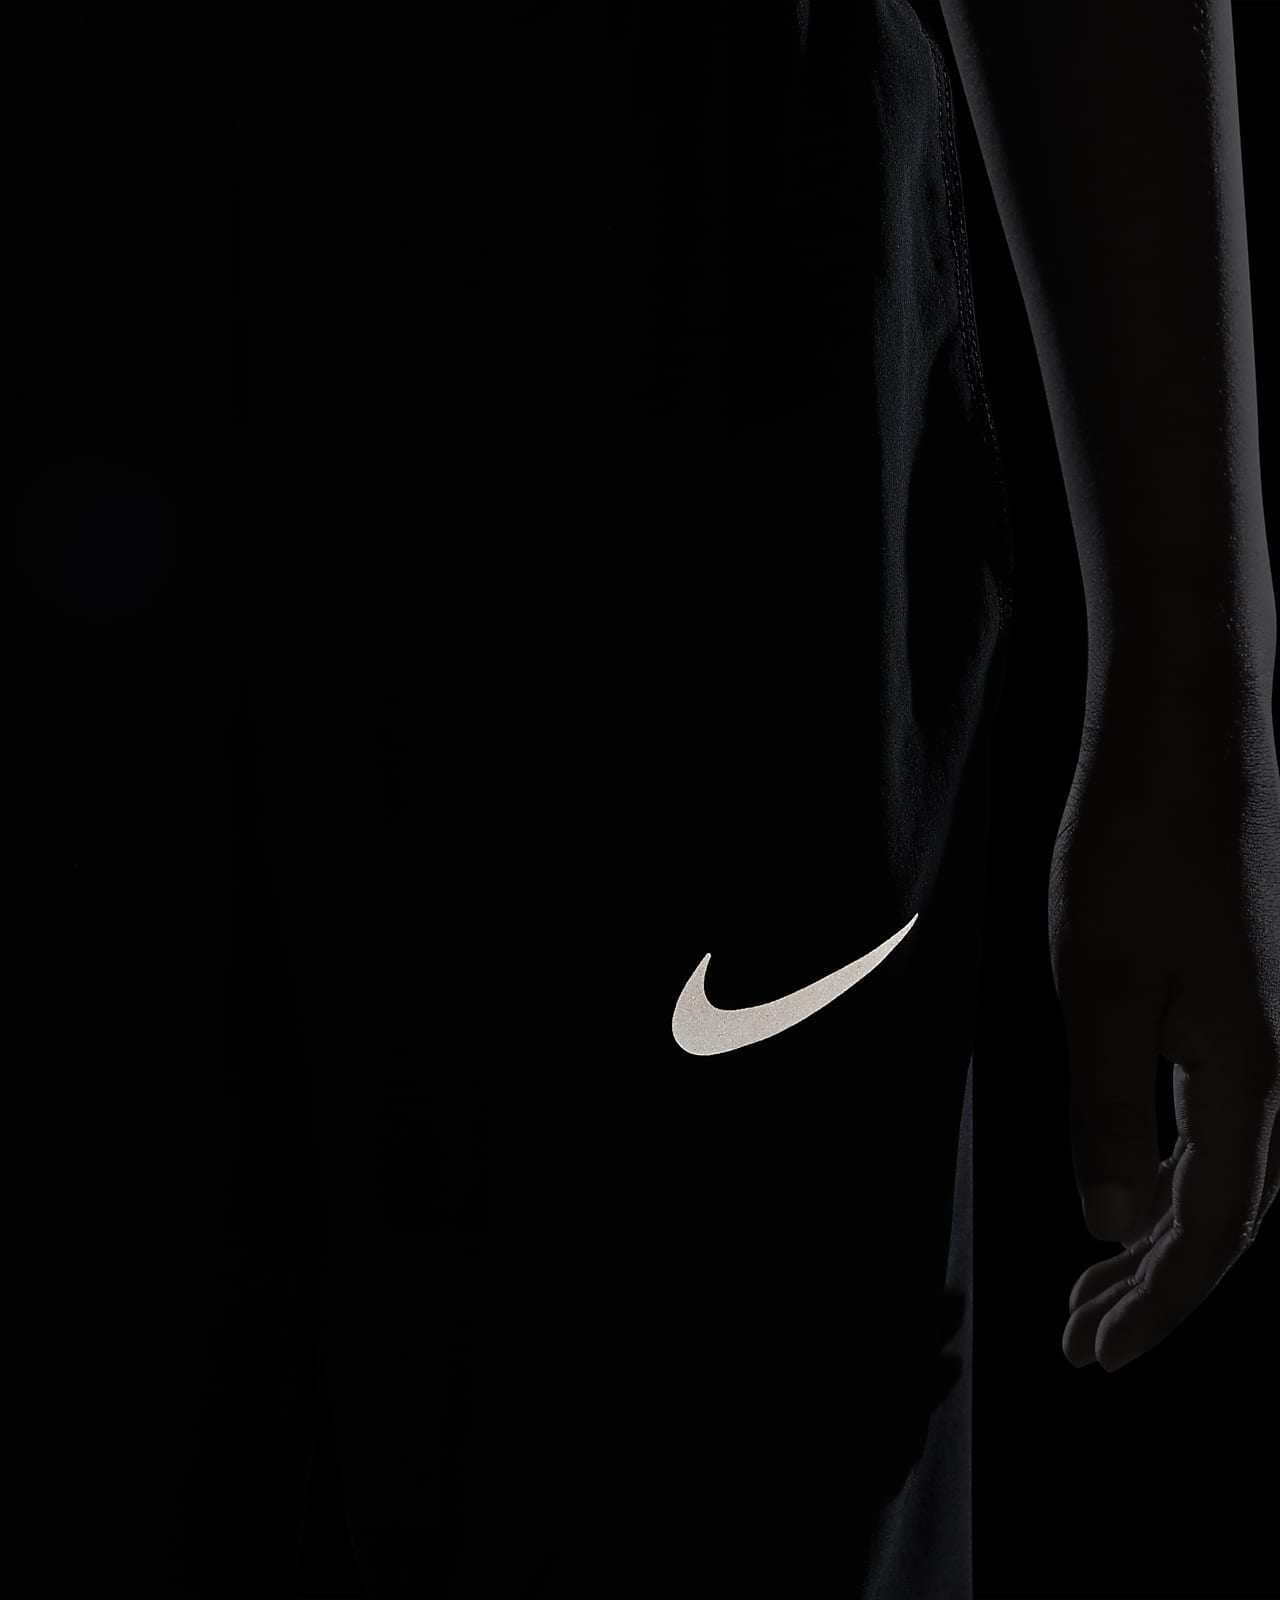 🔥 [26+] Nike Boy Wallpapers | WallpaperSafari